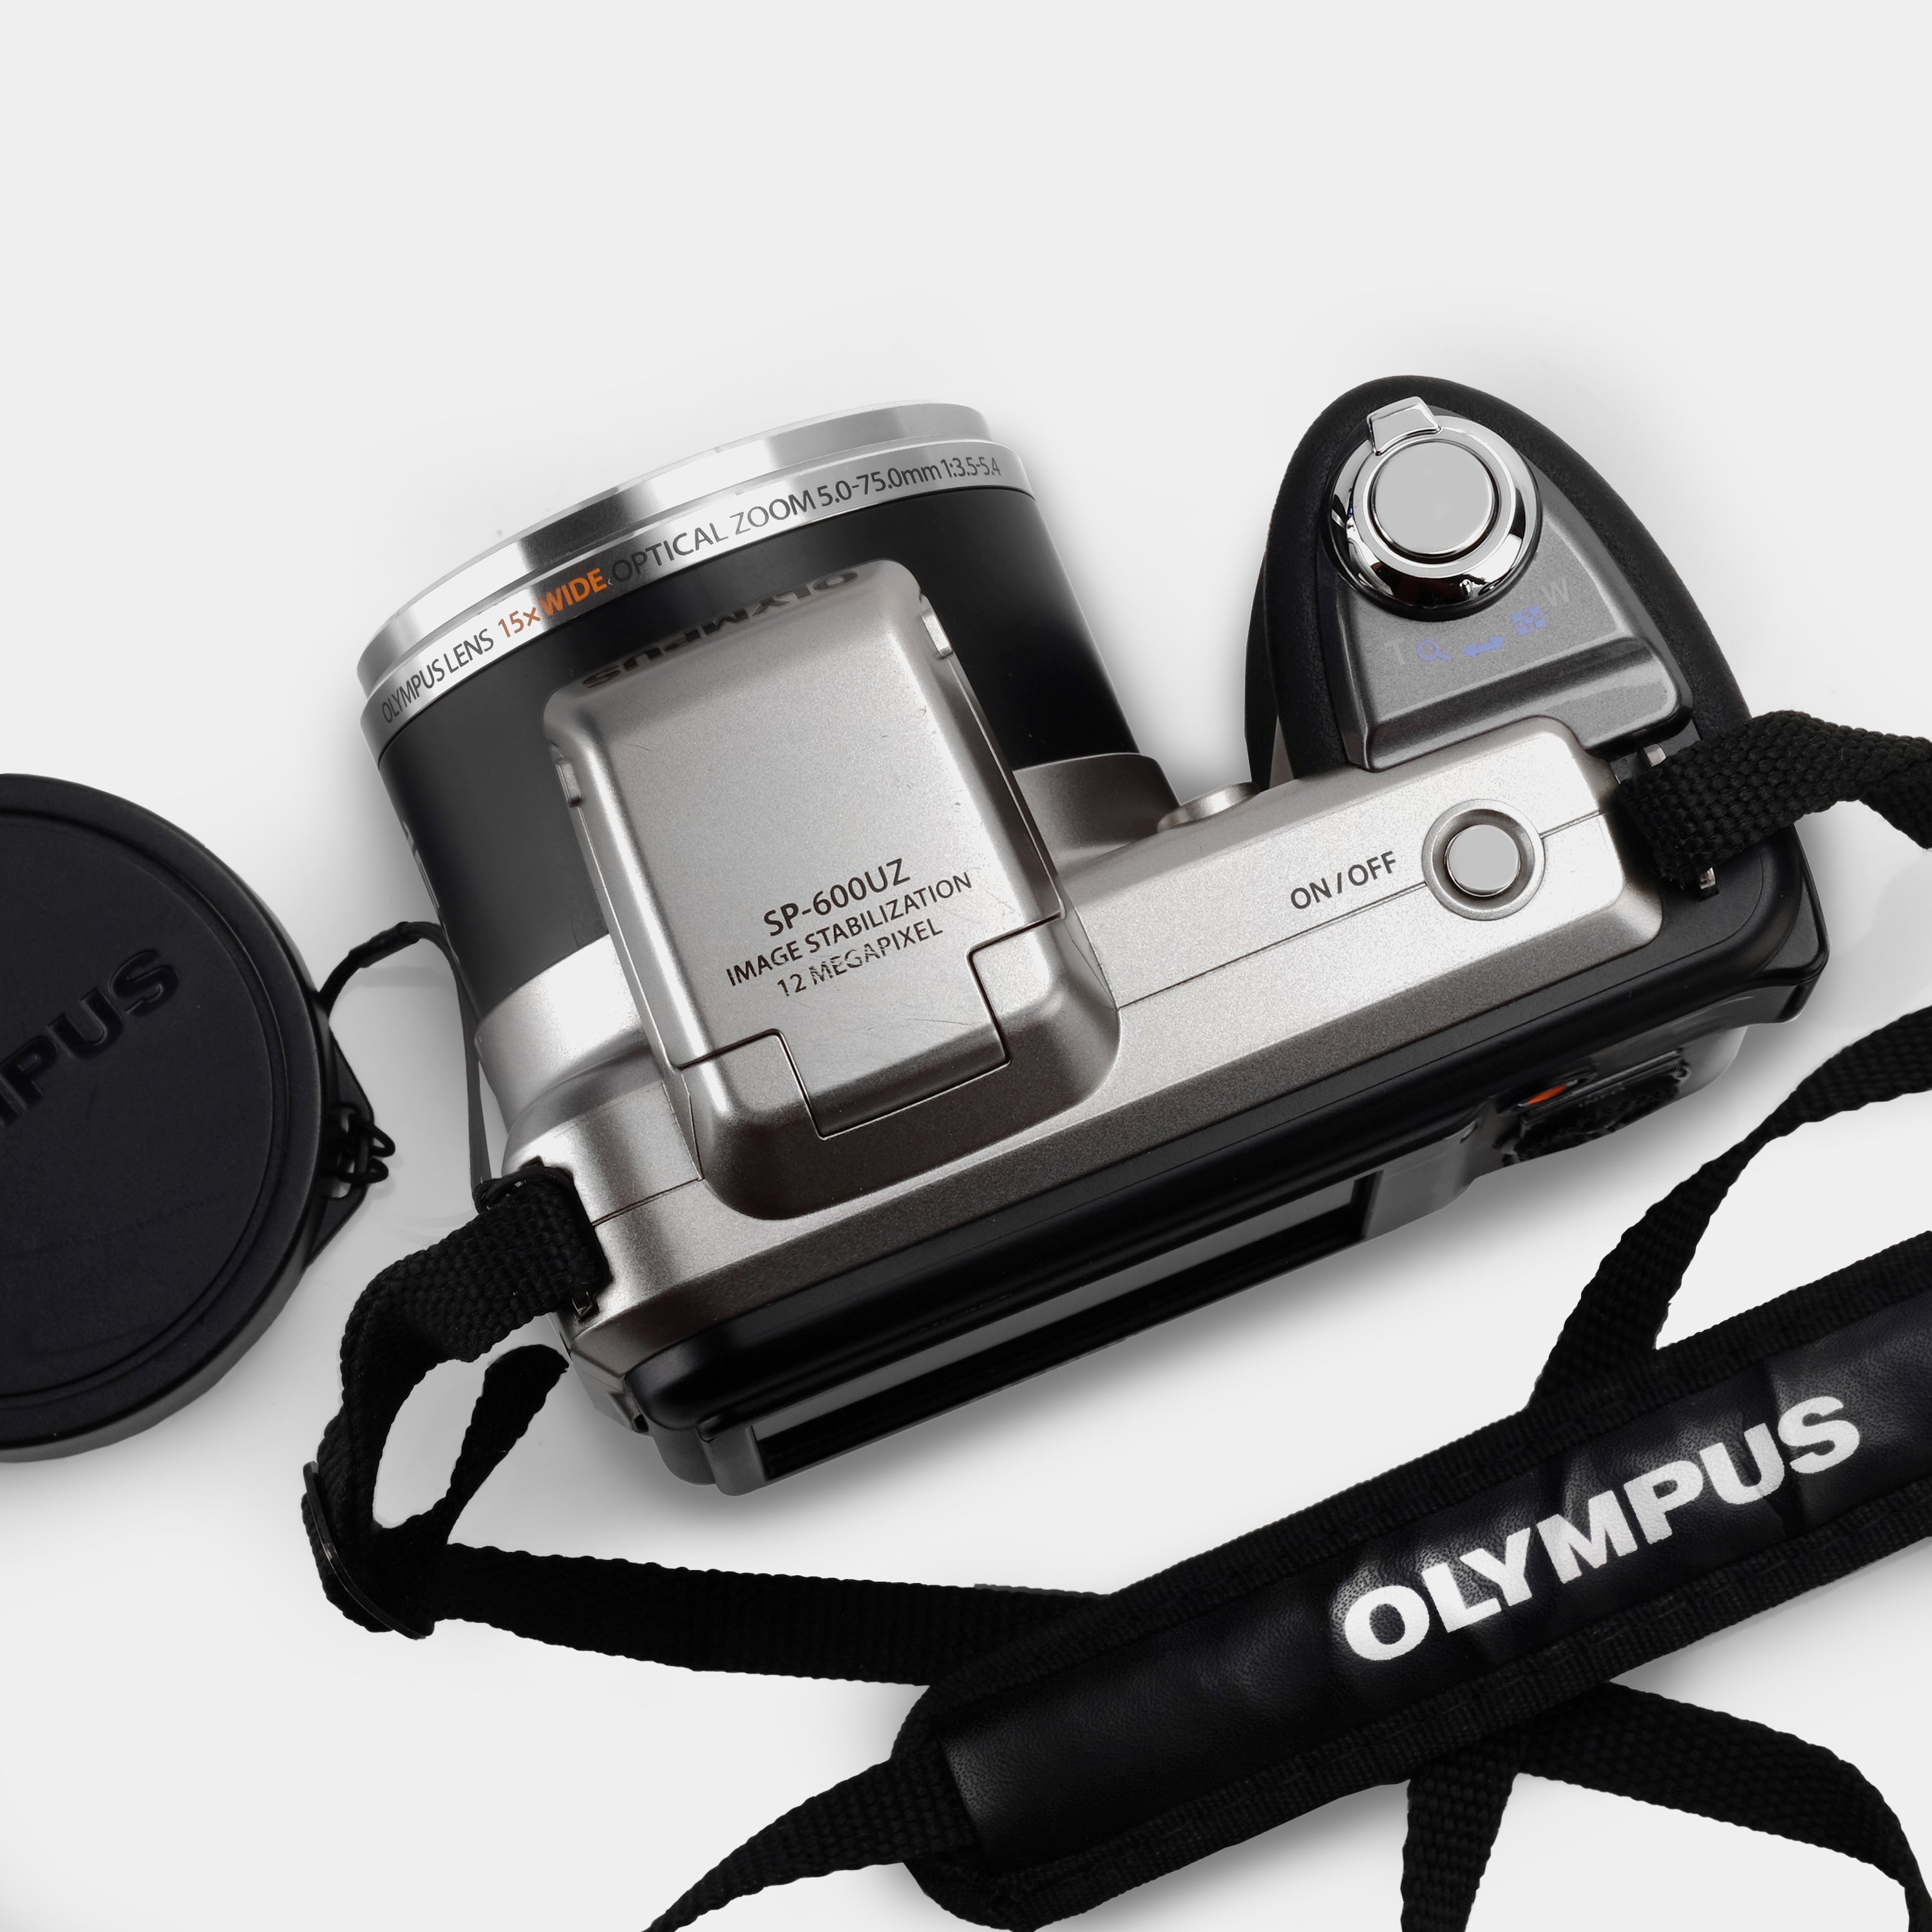 Olympus SP-600UZ Point and Shoot Digital Camera